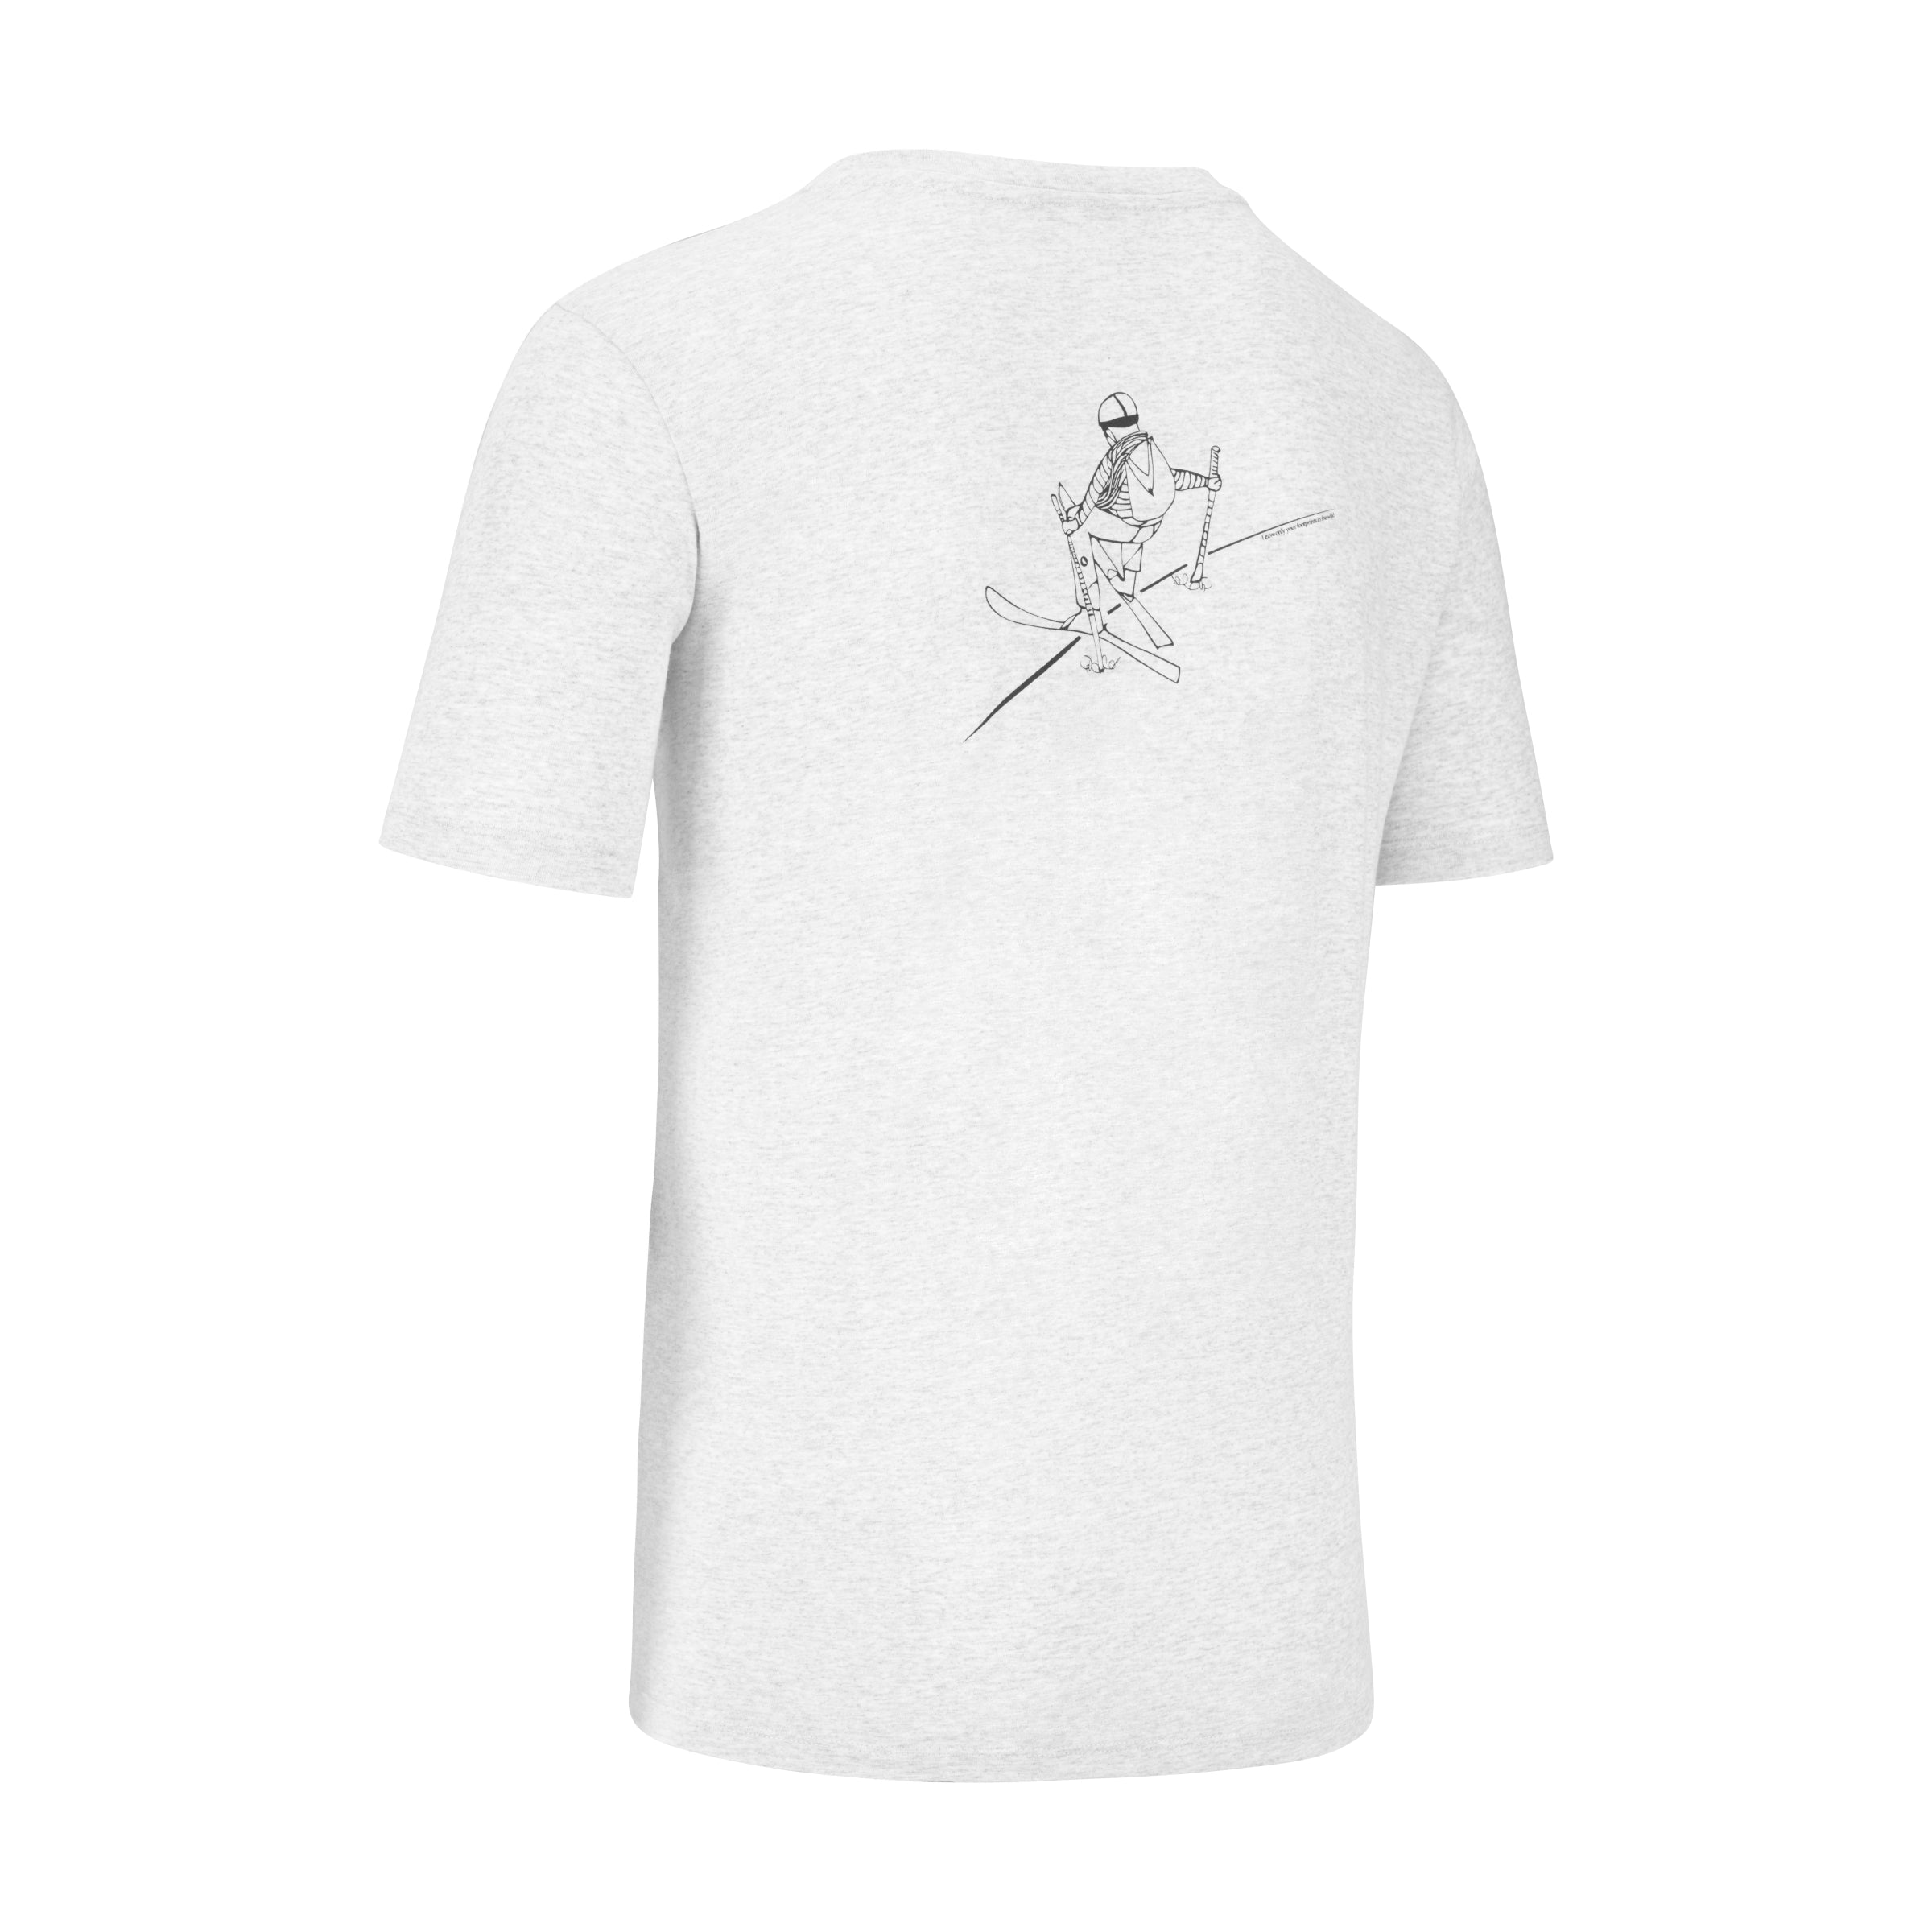 Tee-shirt TEEREC imprimé ski Homme